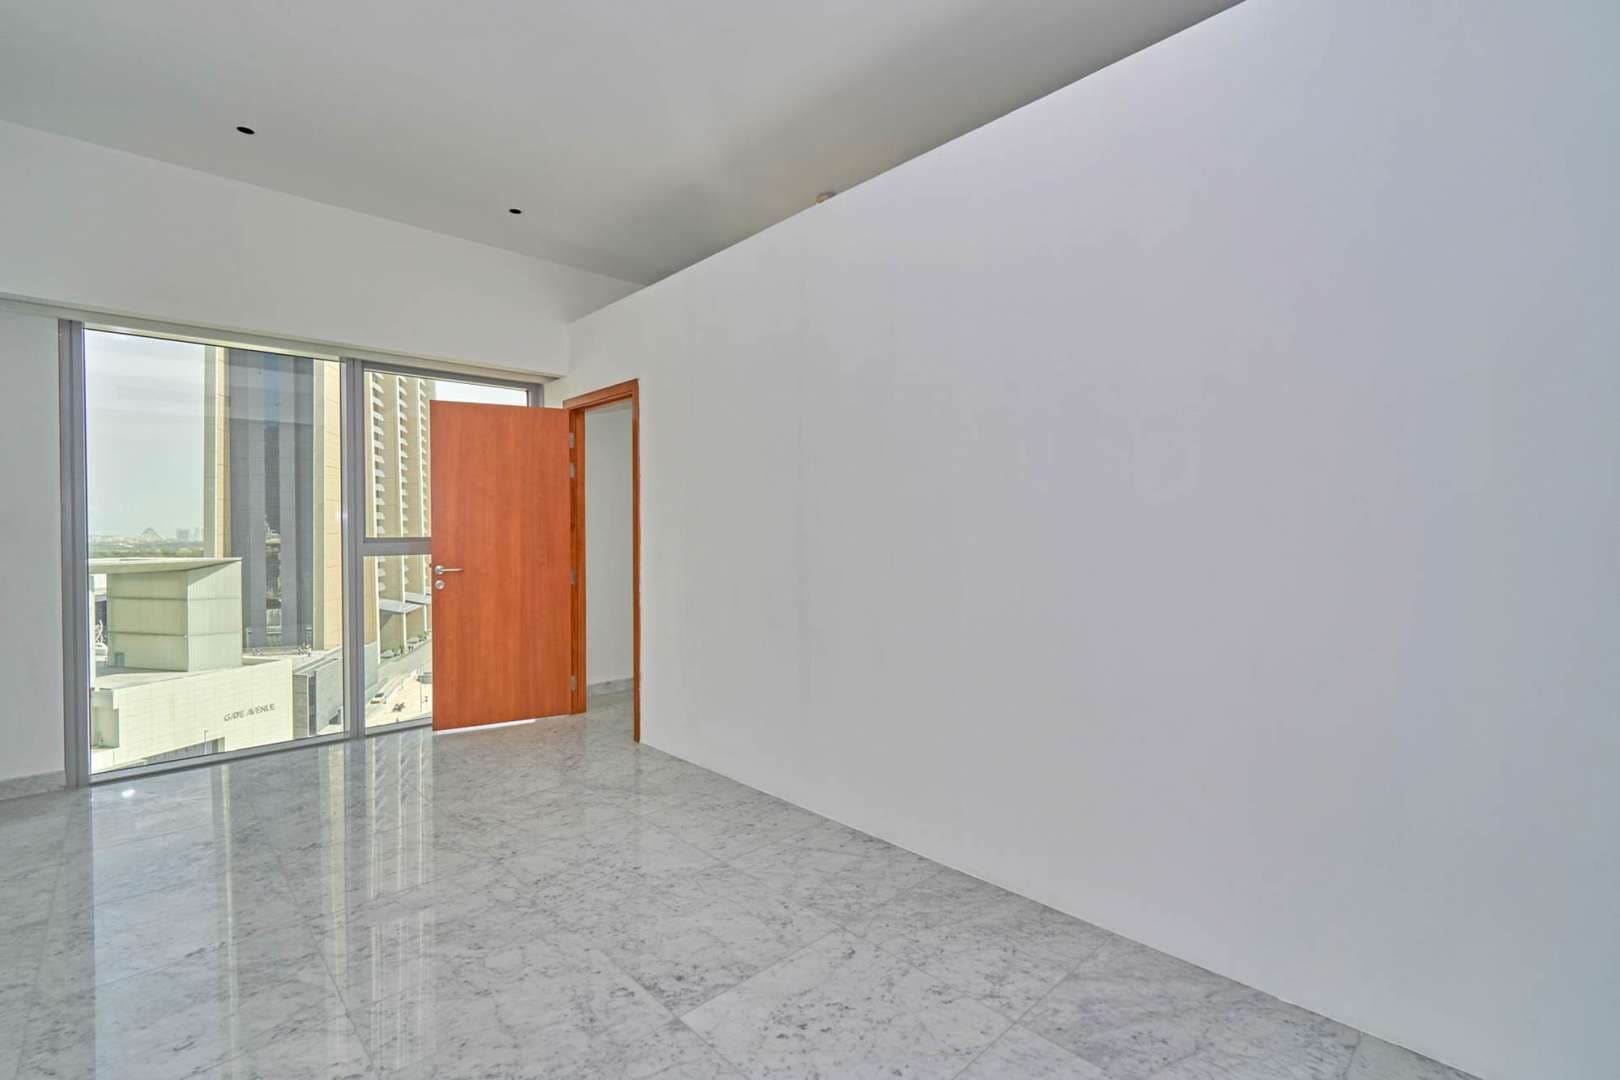 1 Bedroom Apartment For Rent Central Park Tower Lp05835 1e0c85f660b43c00.jpg